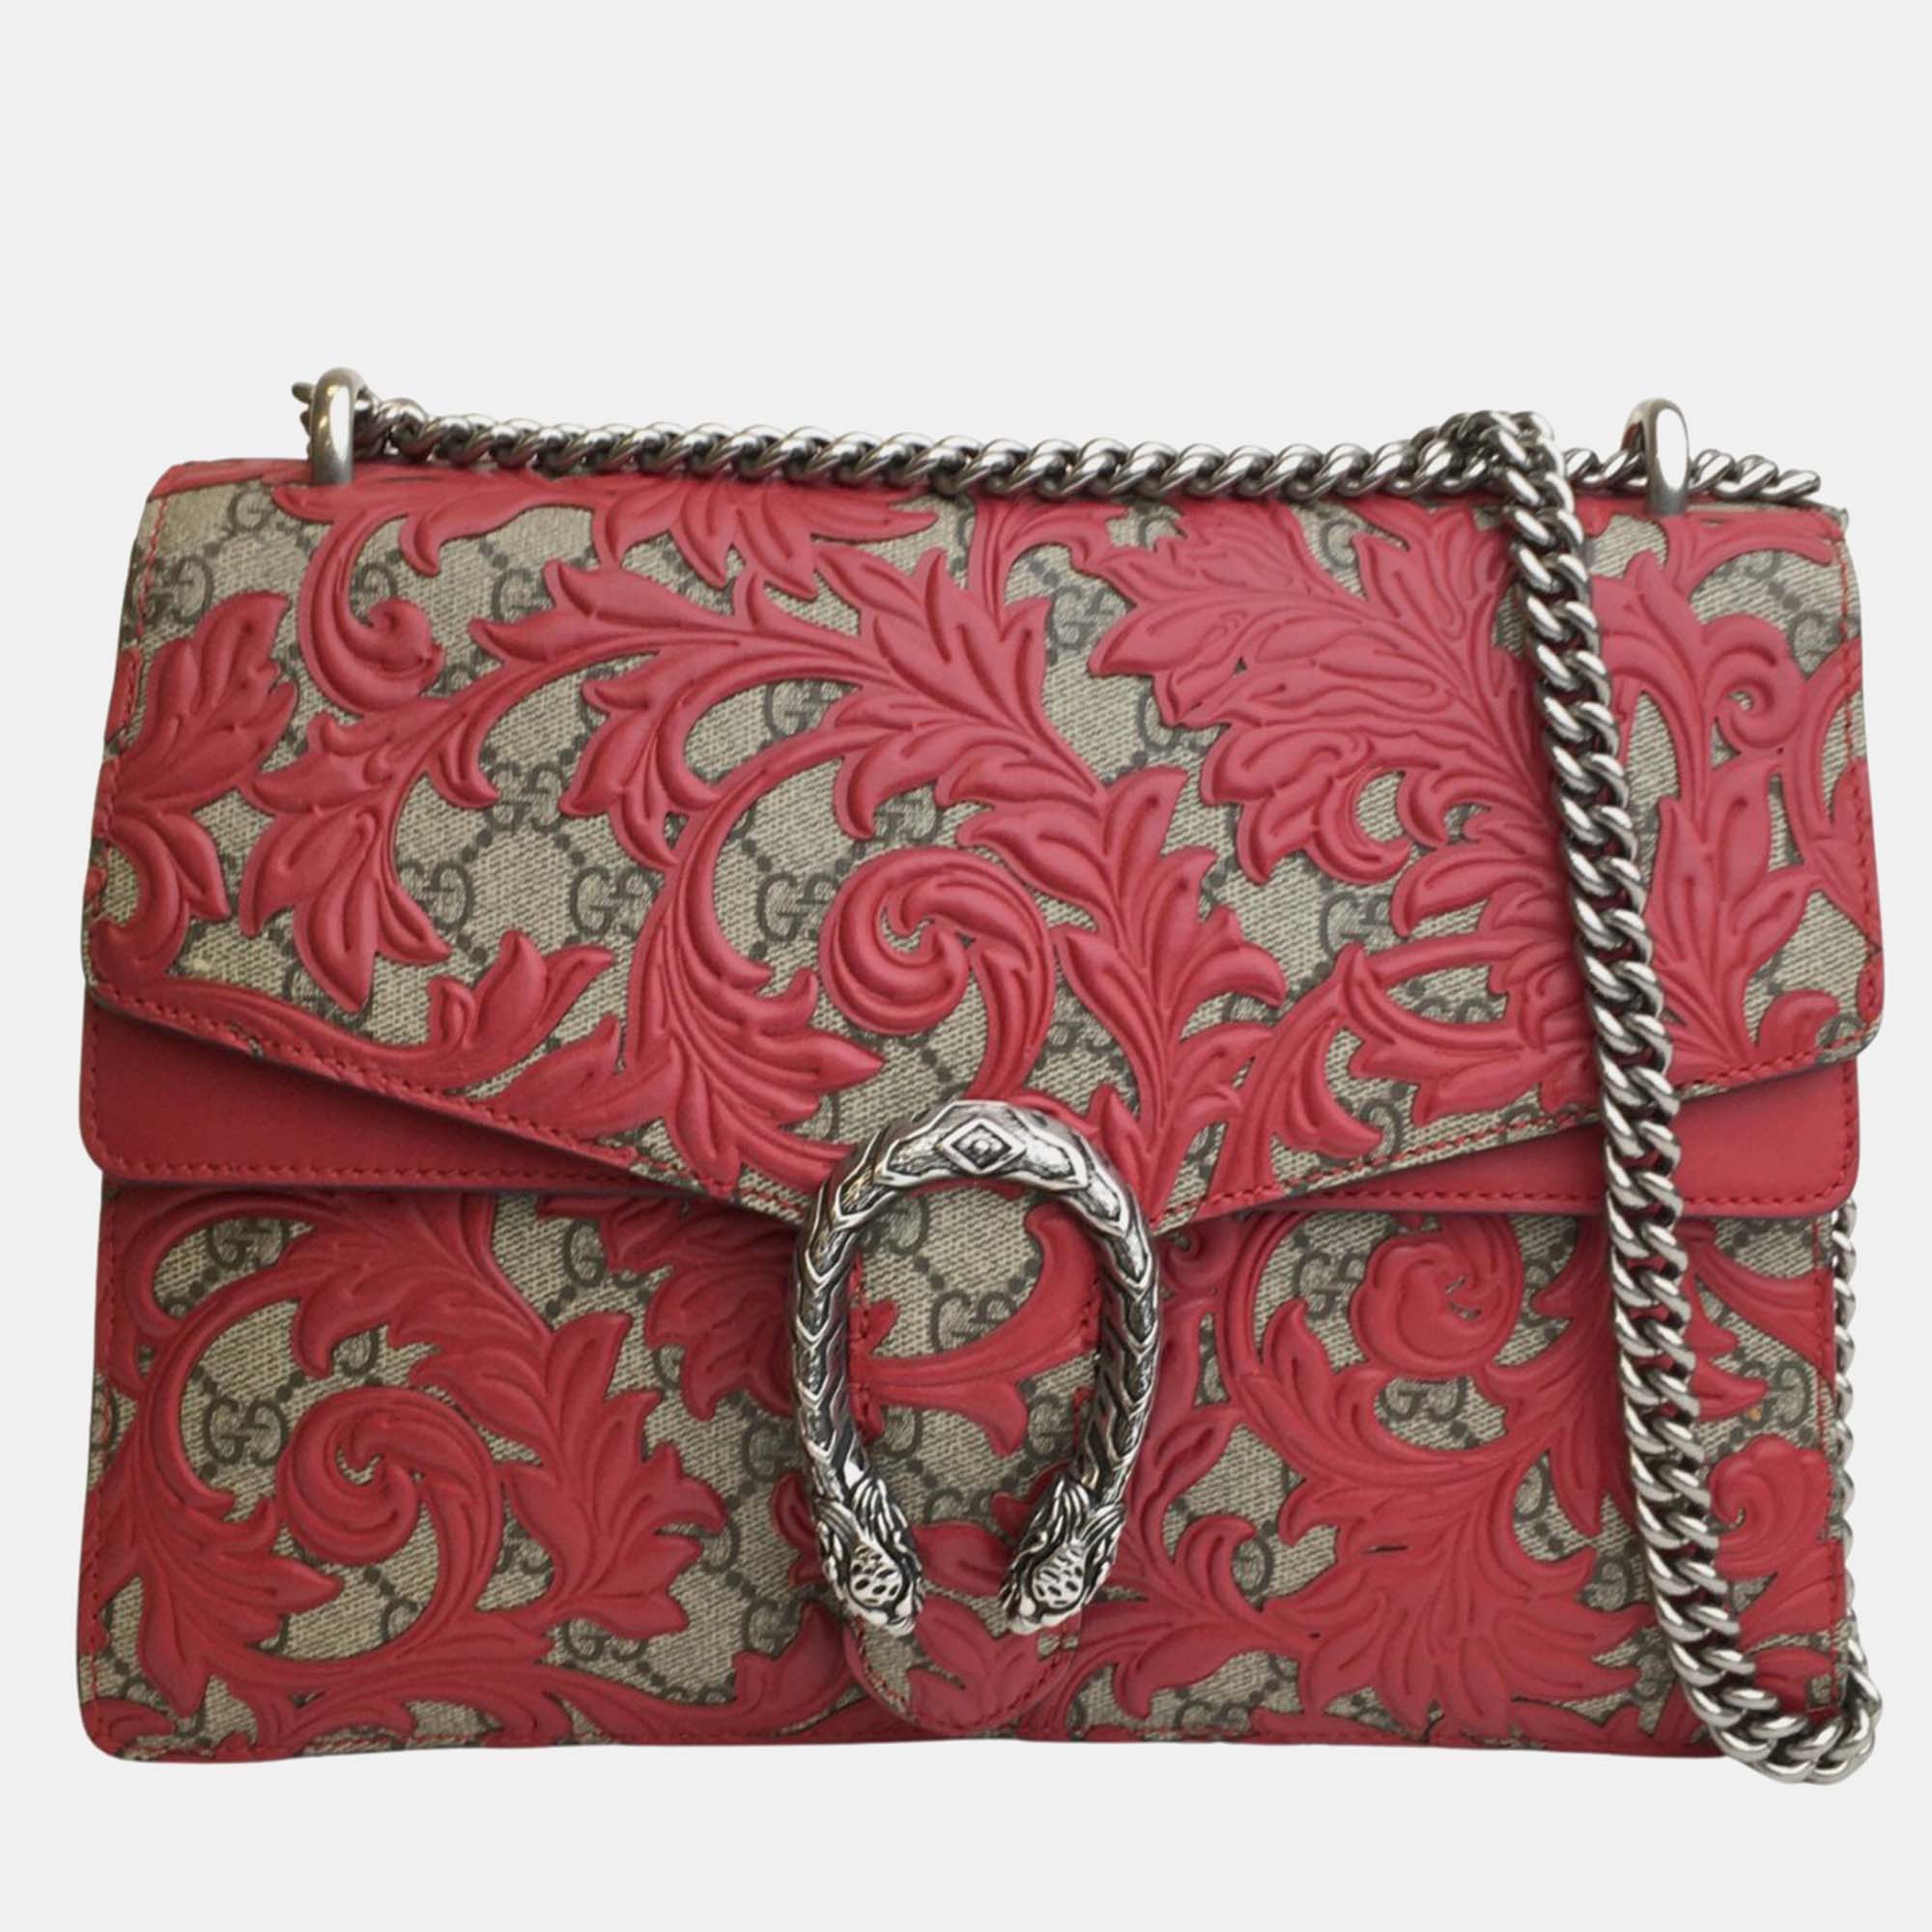 Gucci red leather arabesque dionysus shoulder bag